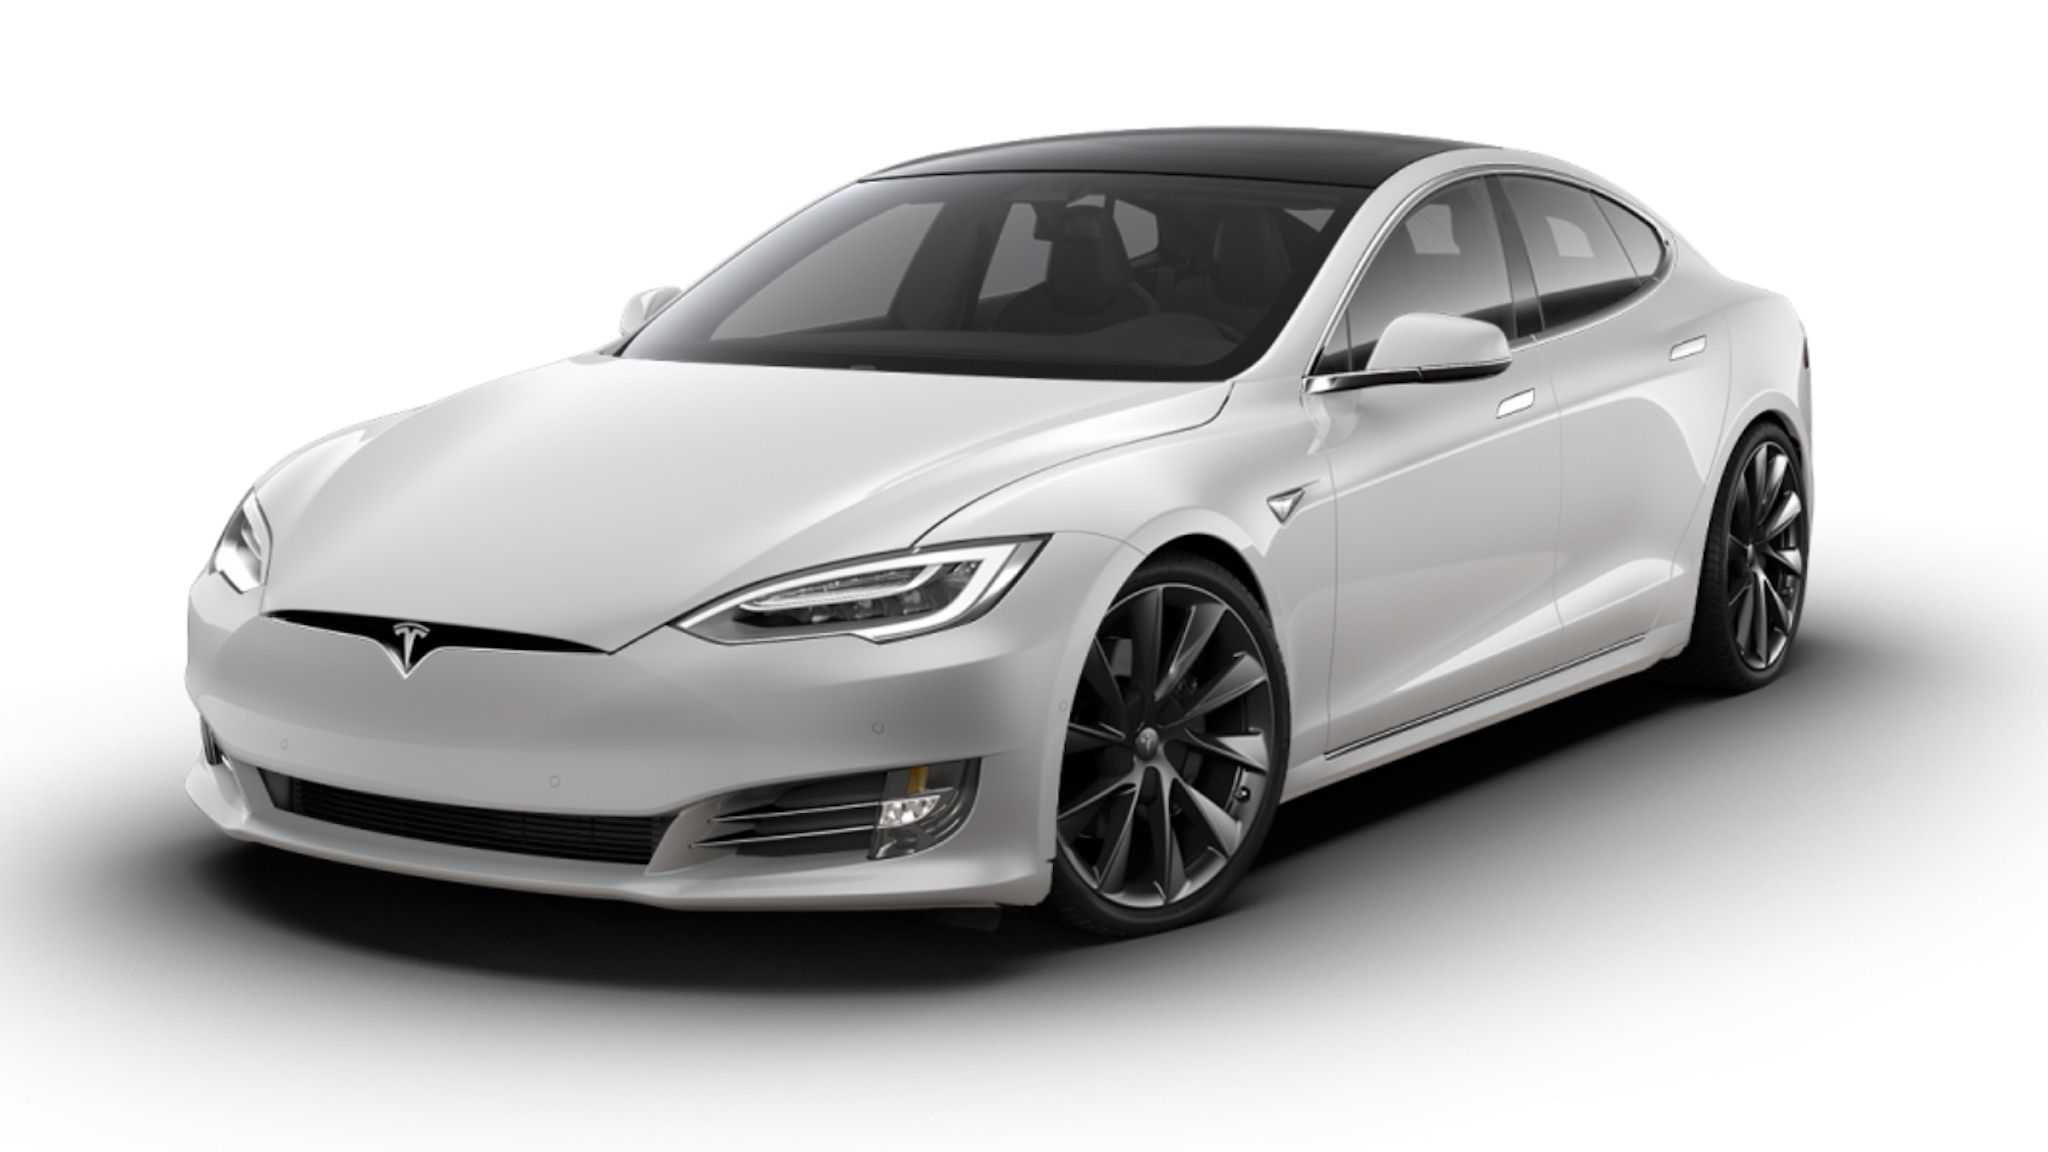 Tesla Model S Getting a Nice Price Cut, According to Elon Musk